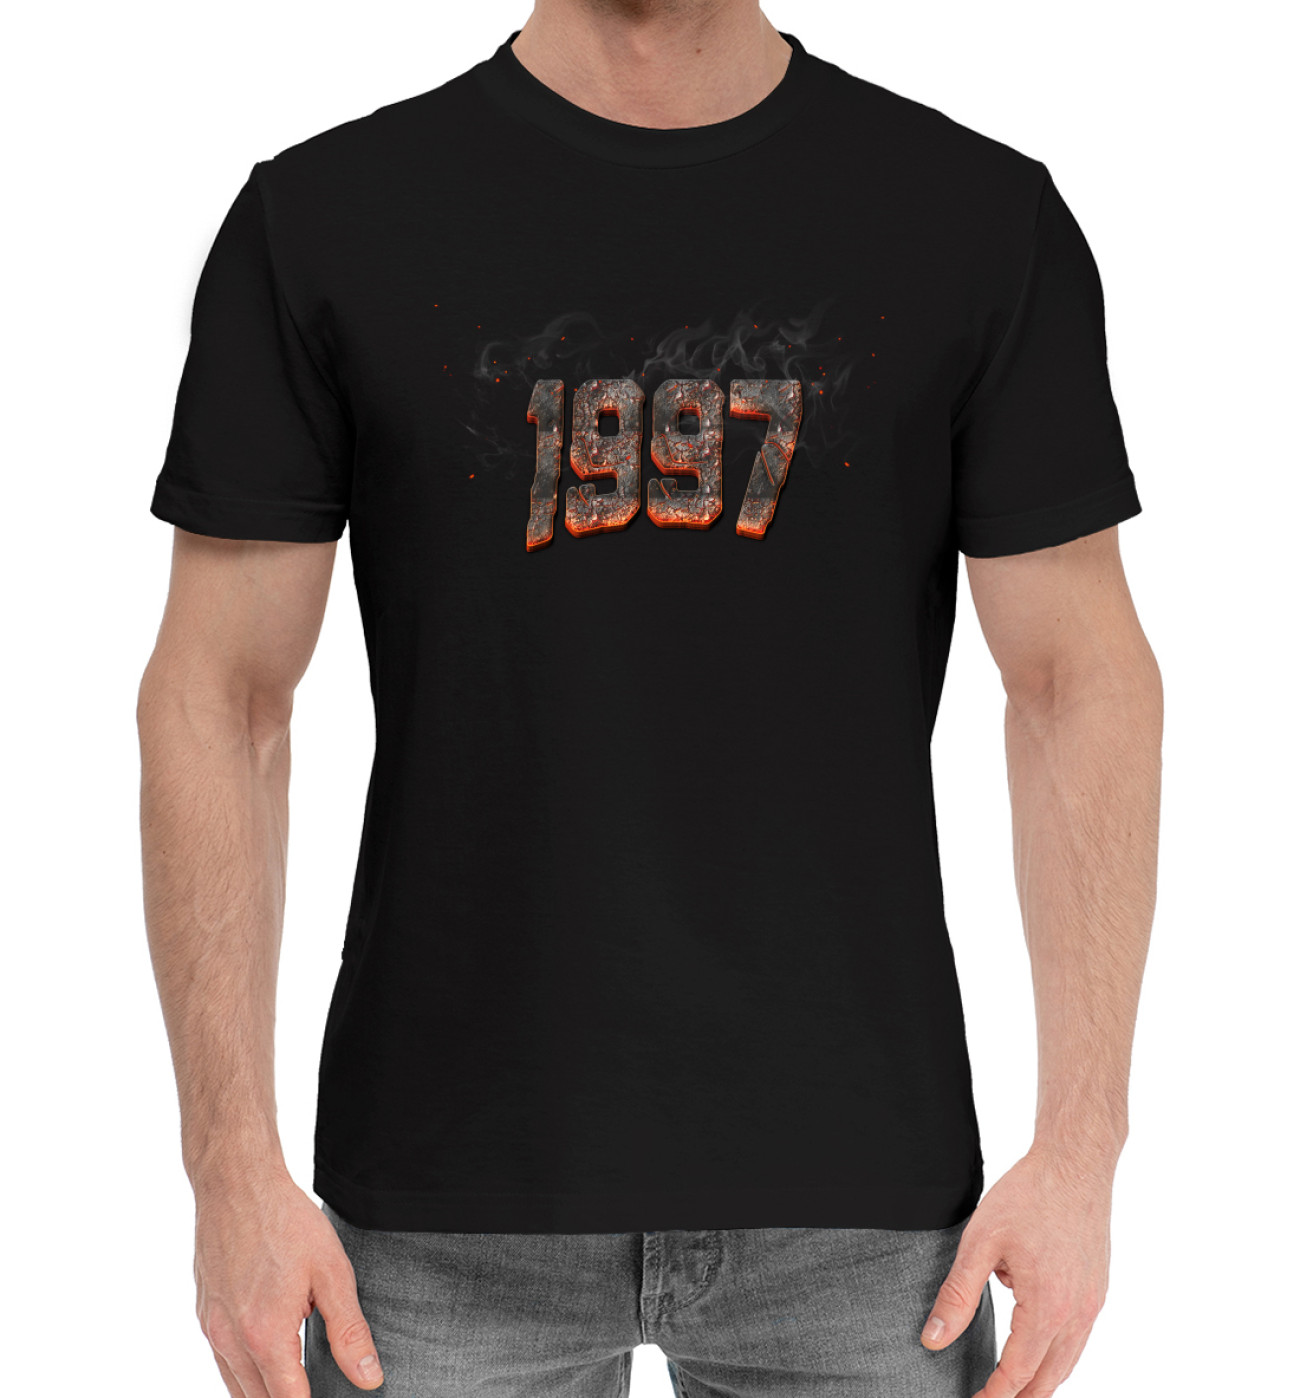 Мужская Хлопковая футболка 1997, артикул: DDE-923362-hfu-2